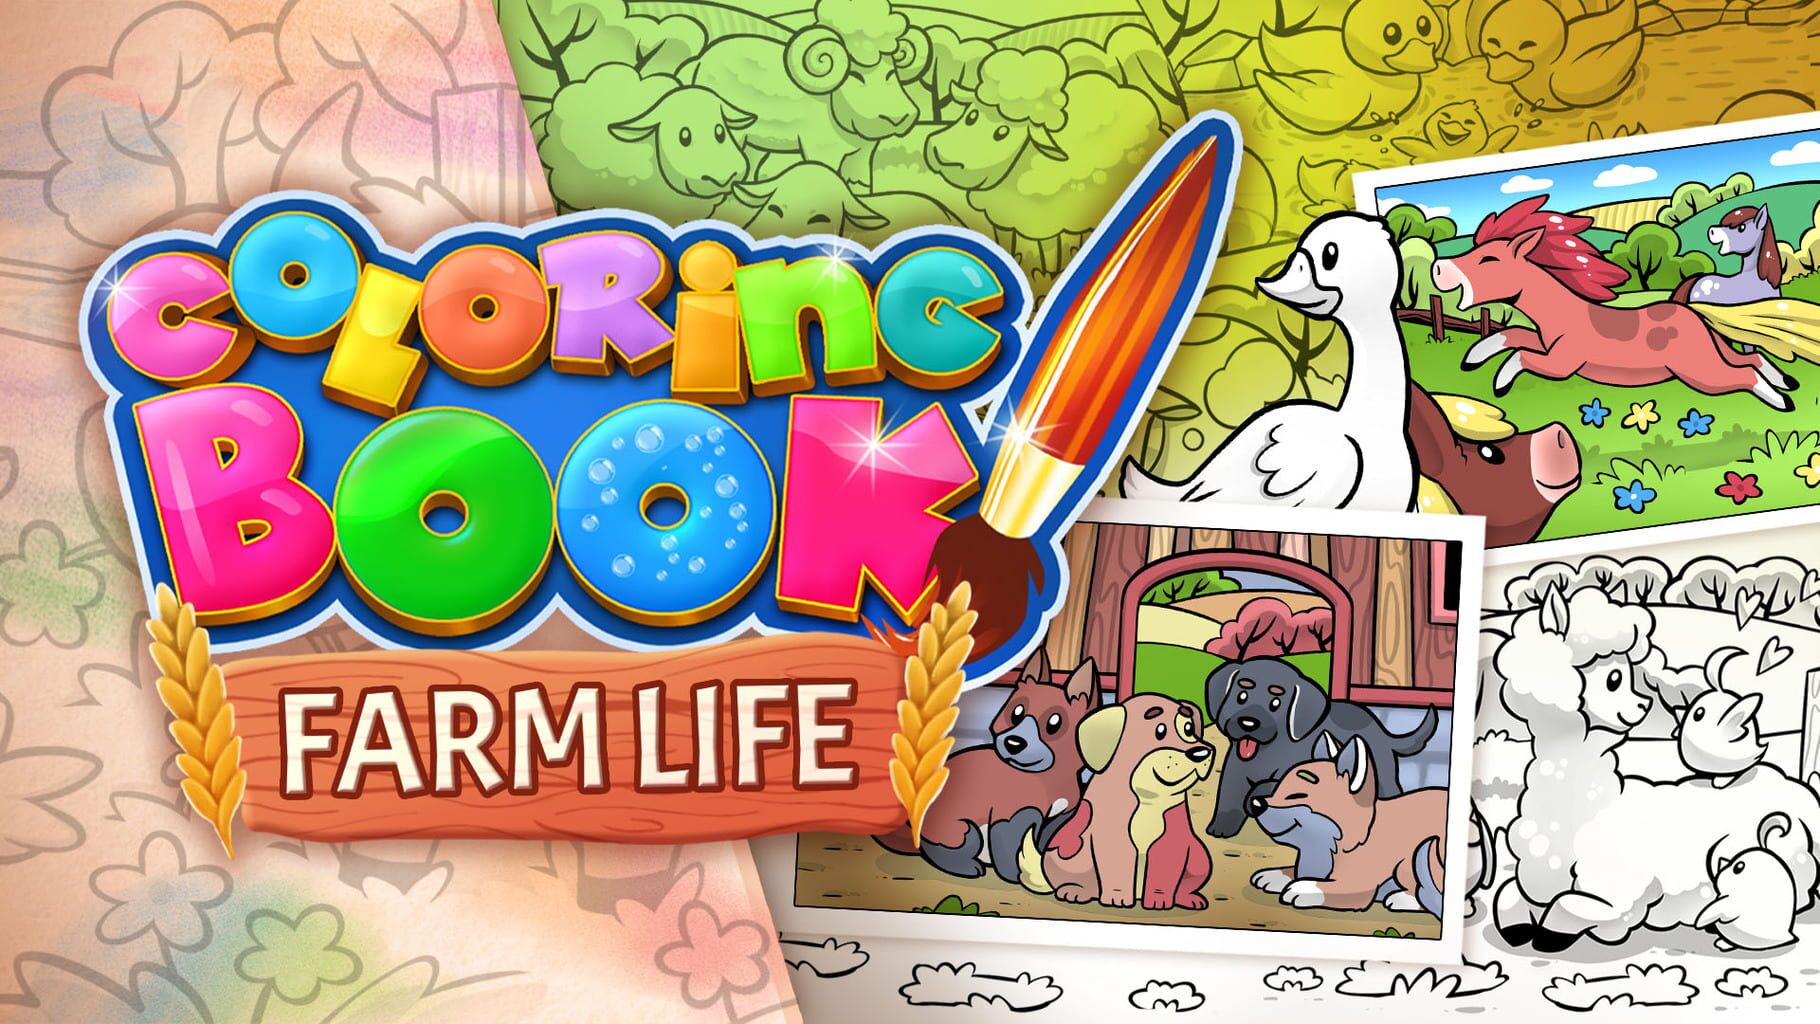 Coloring Book: Farm Life artwork